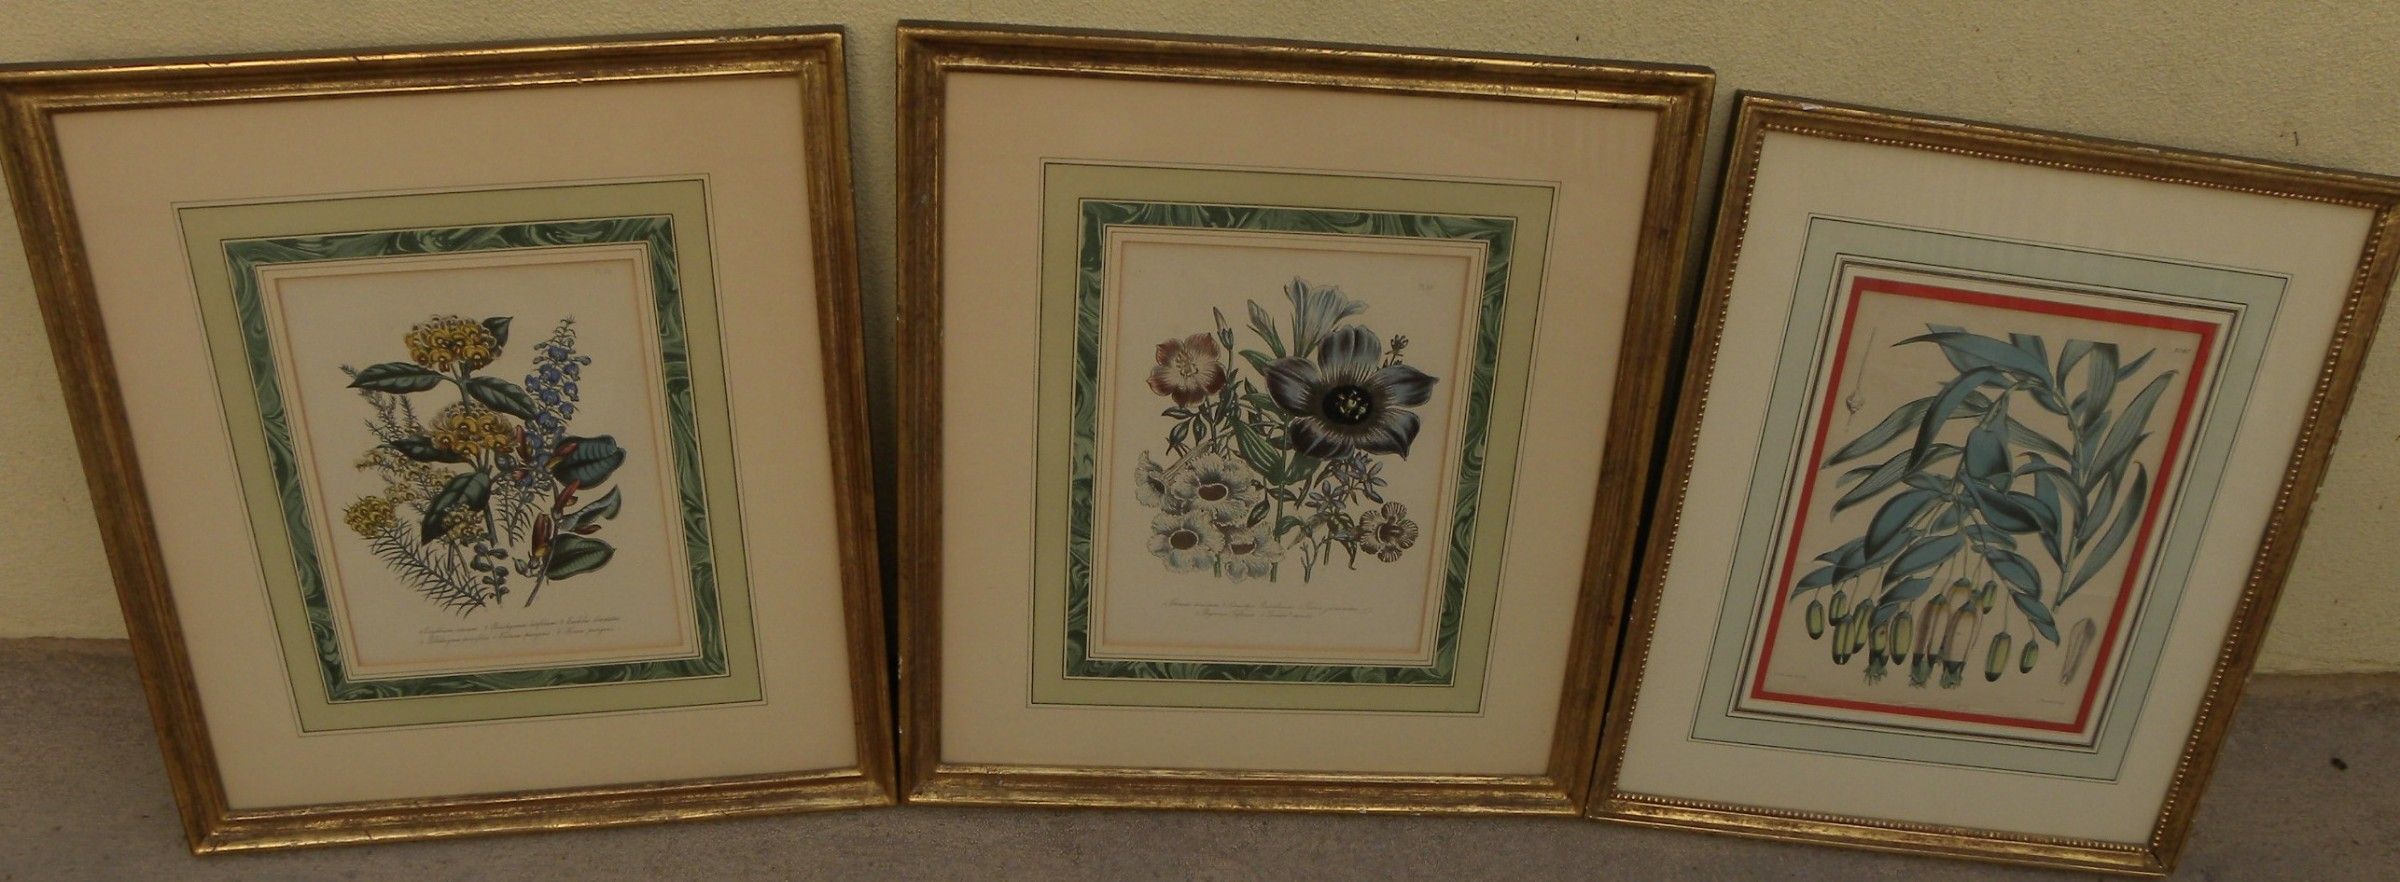 Antique English botanical prints in quality frames (three)